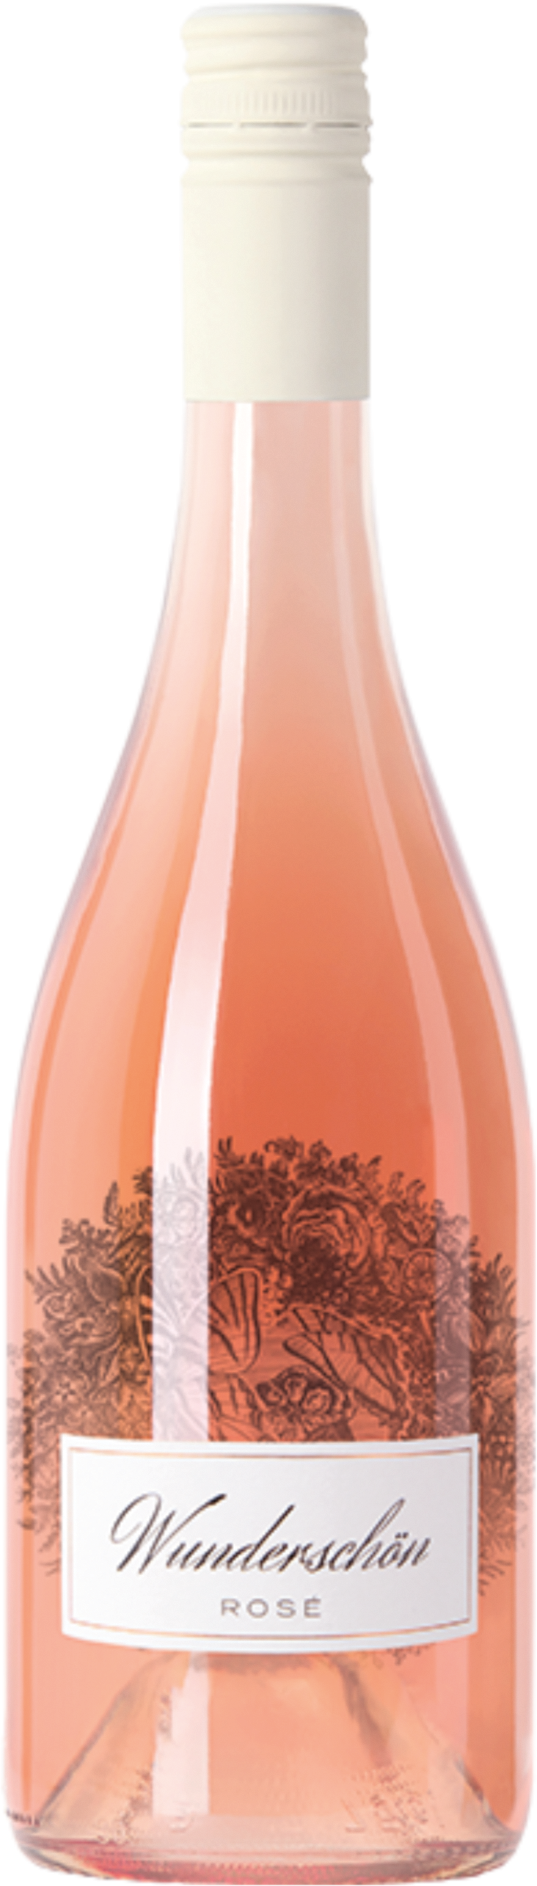 St.Antony Wunderschön Pure Rosé - 2020